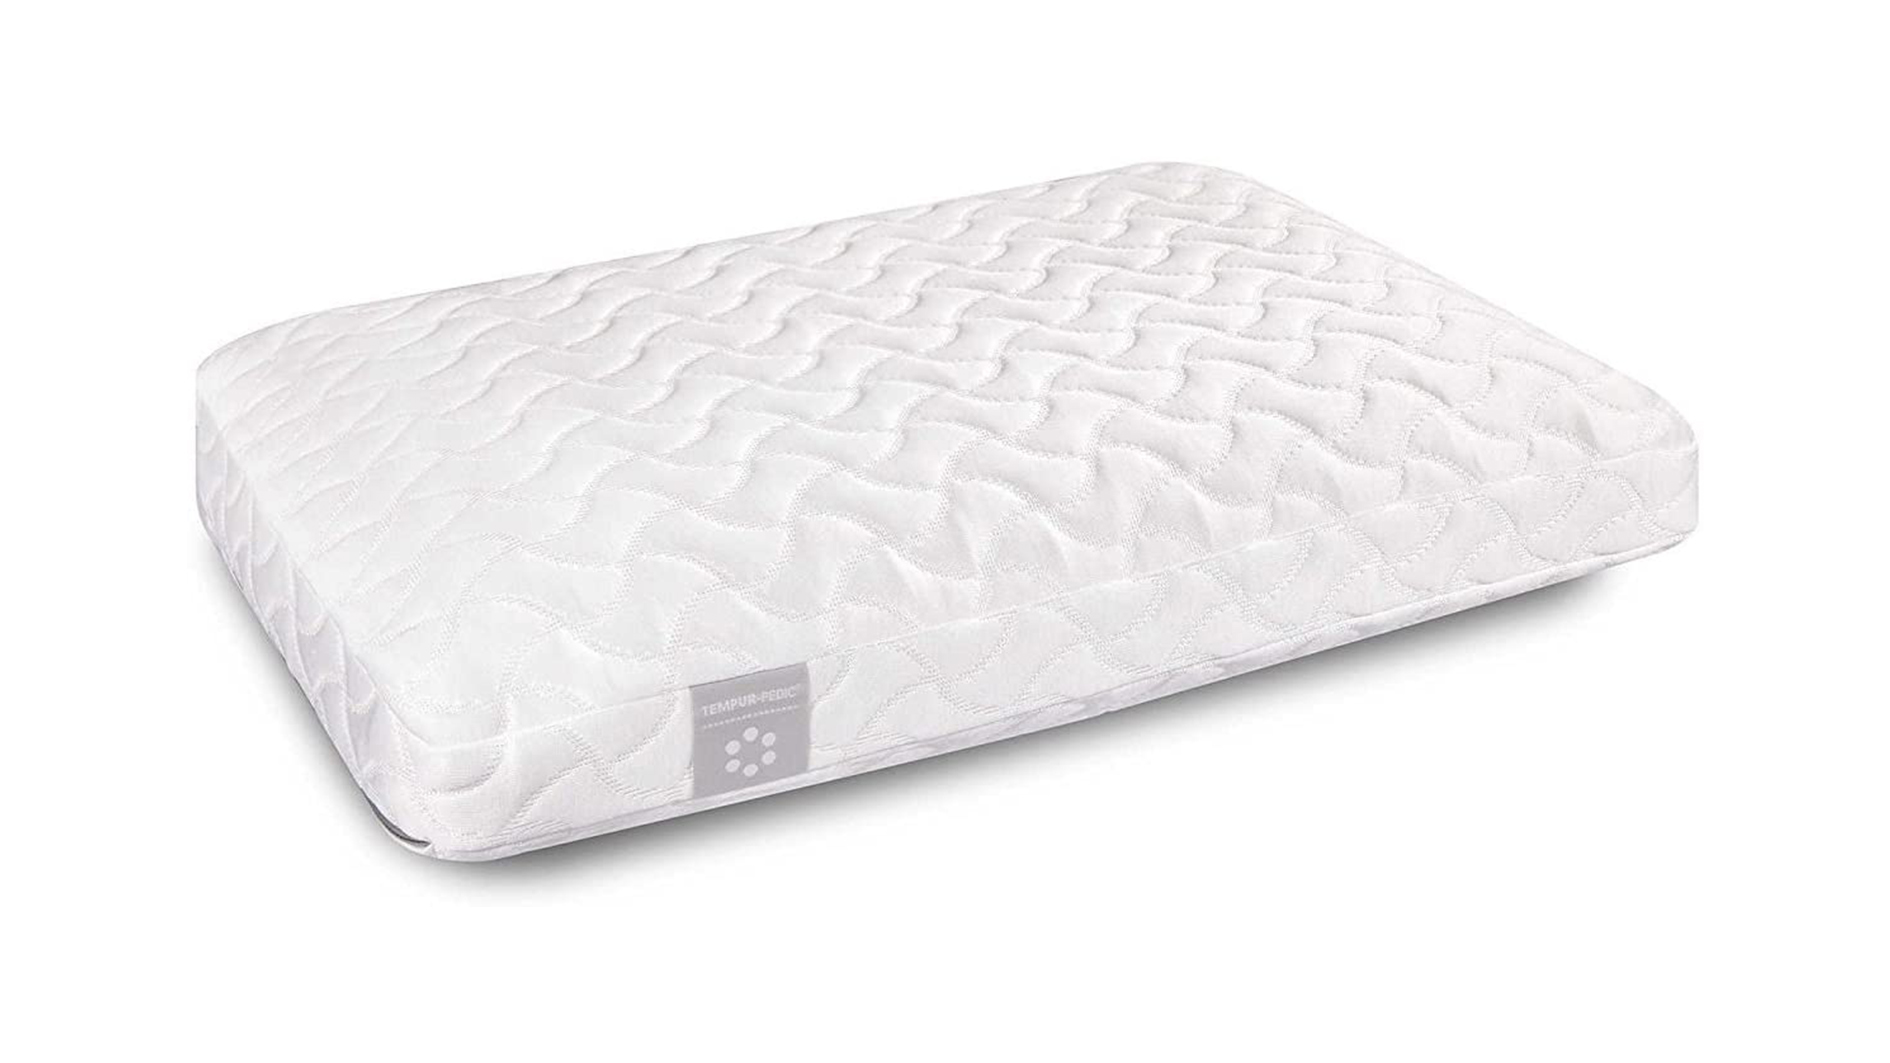 Best pillows: Tempur-Pedic Tempur Cloud Pillow on a white background